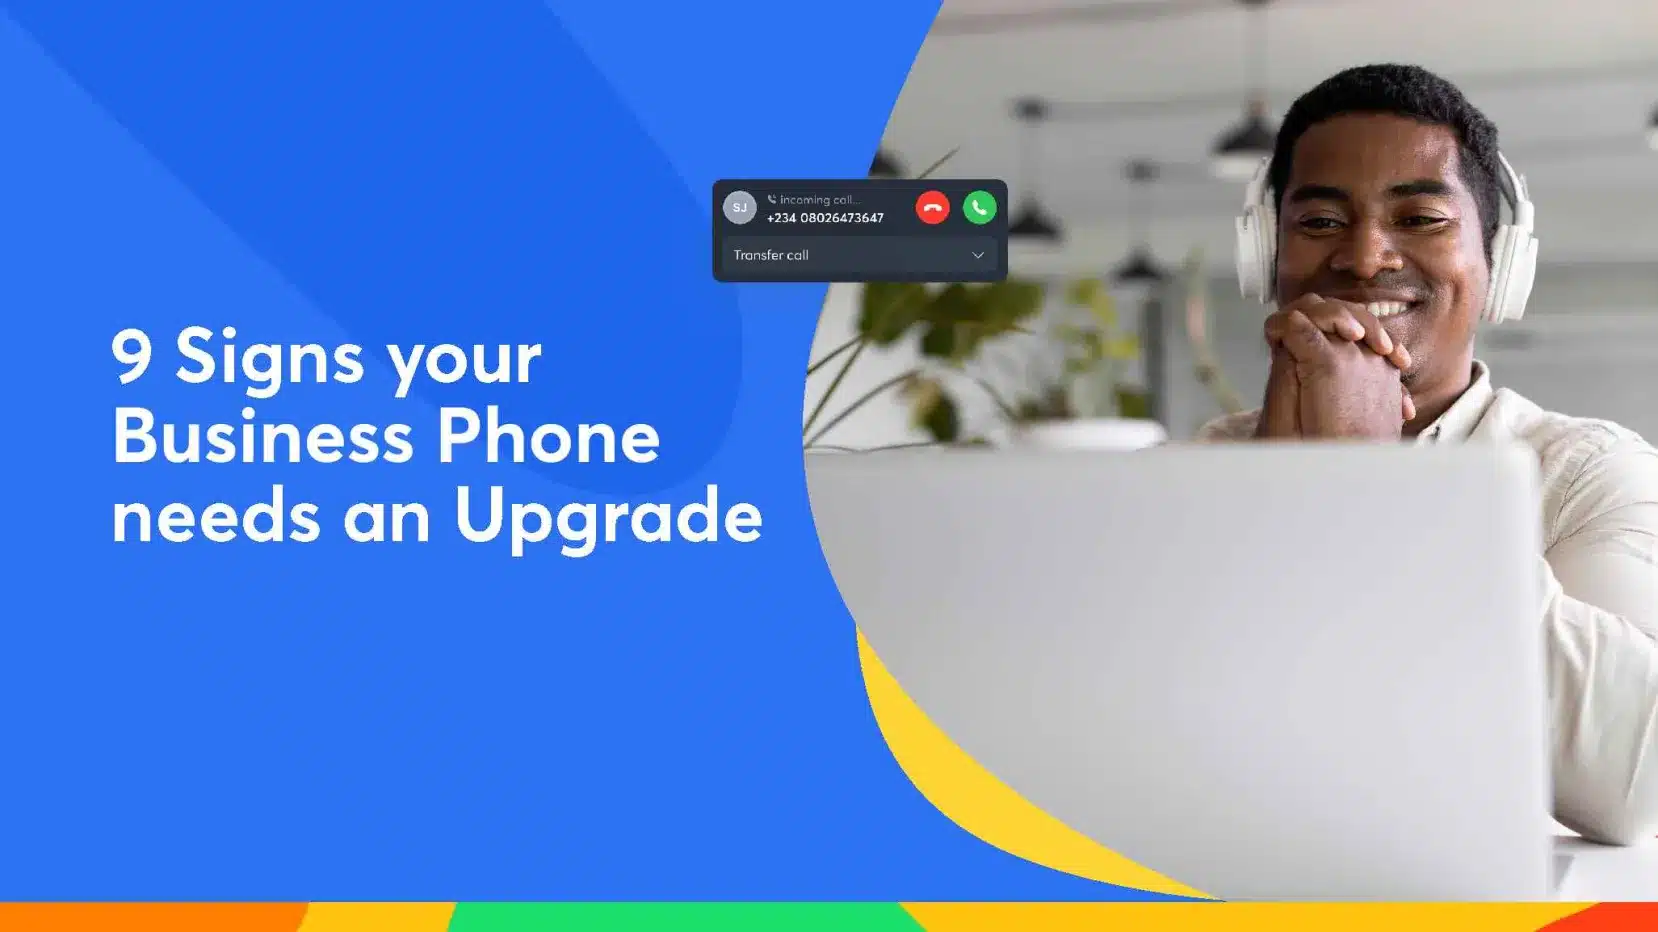 Business Phone needs an Upgrade